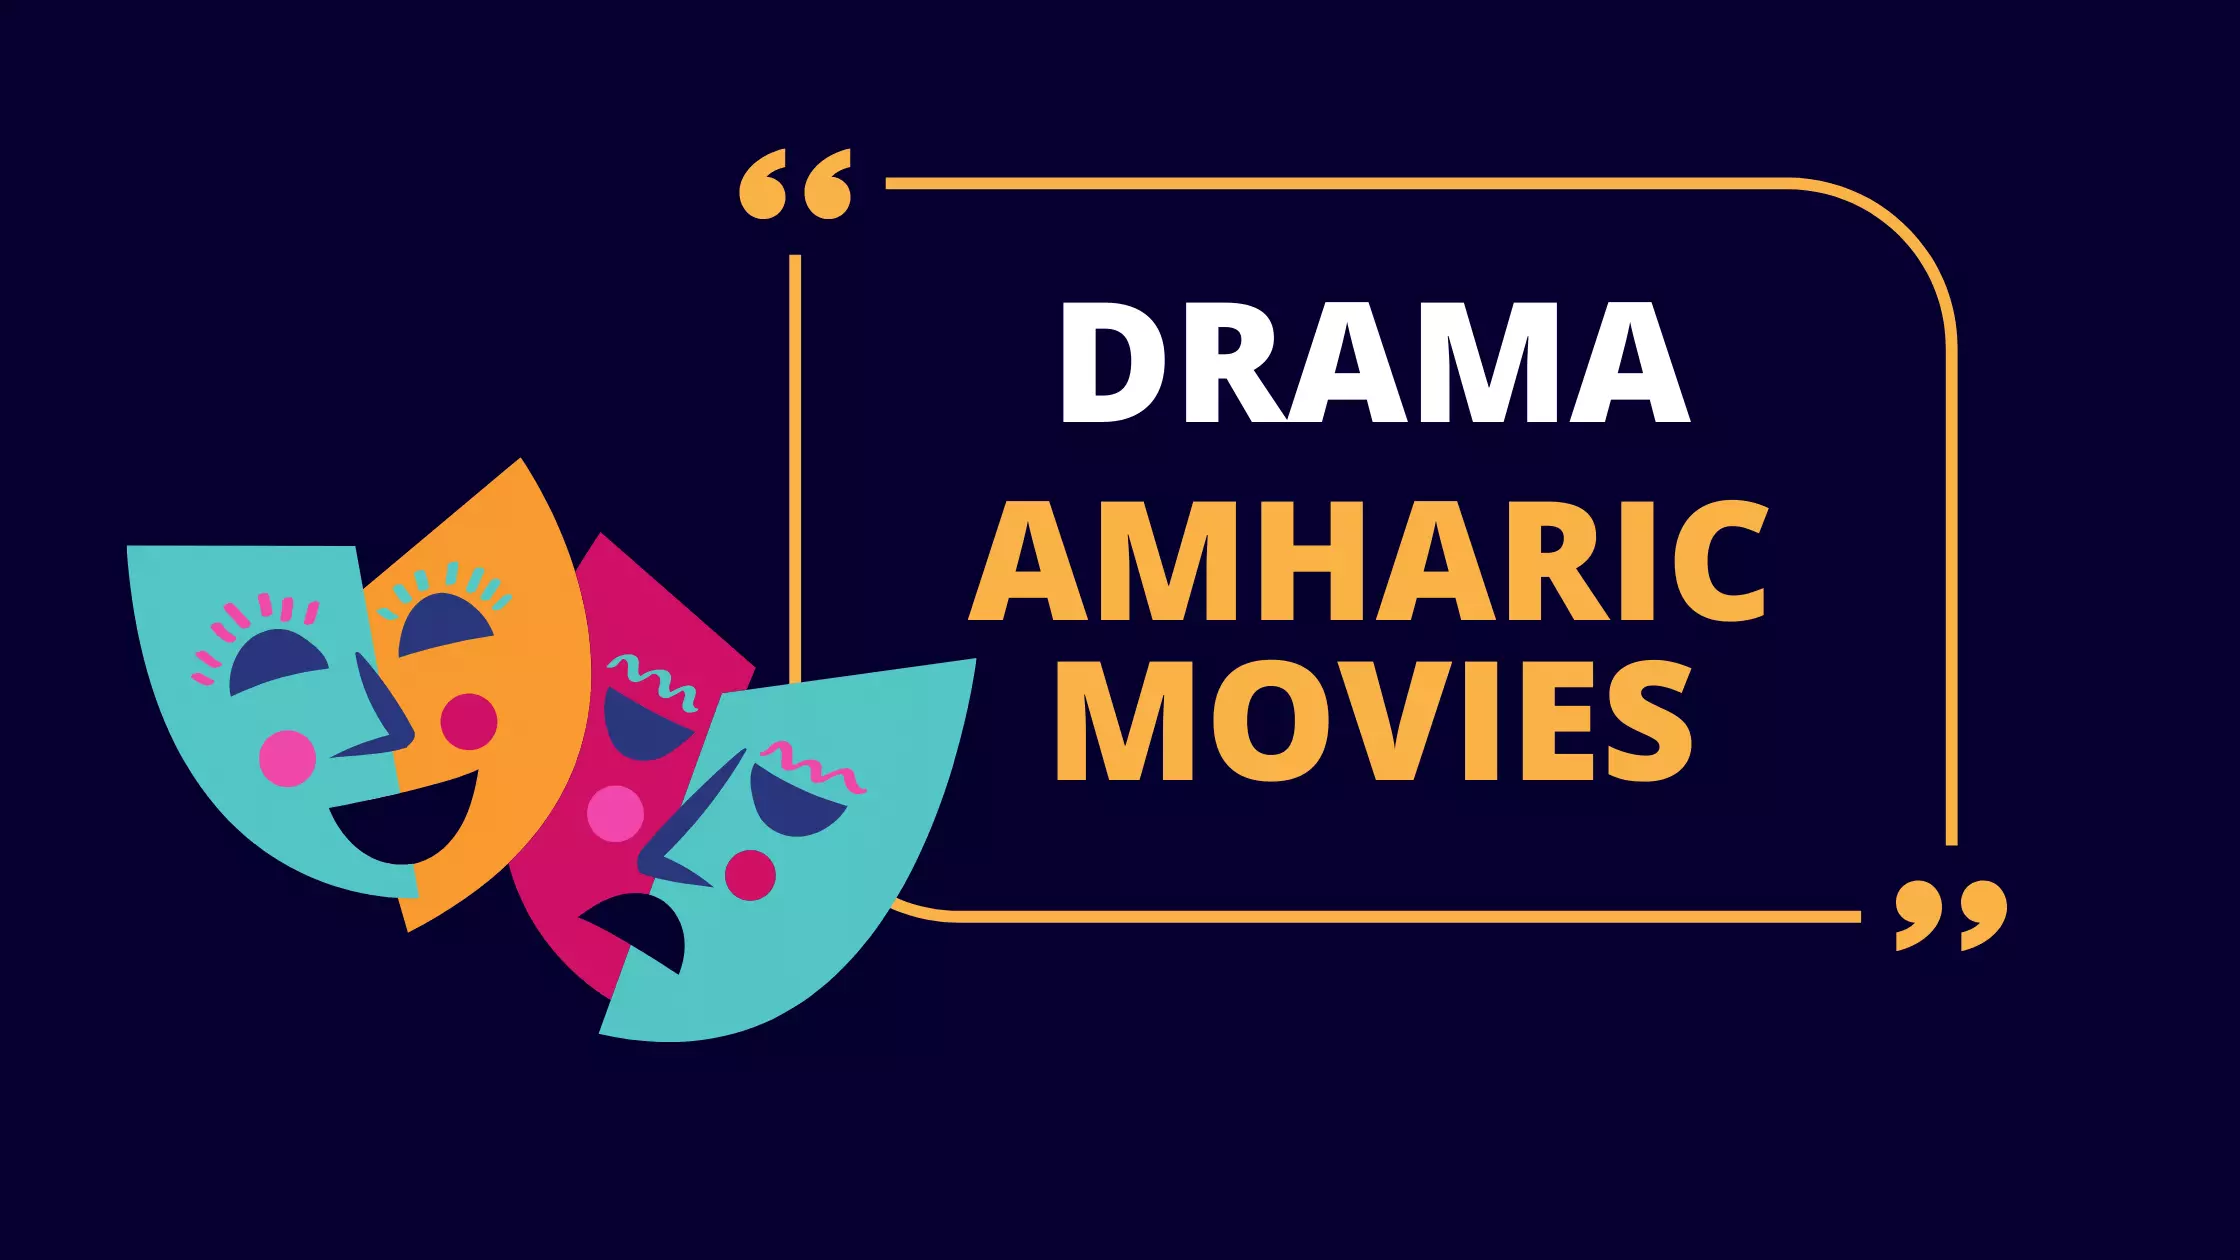 Top 10 Drama Amharic Movies